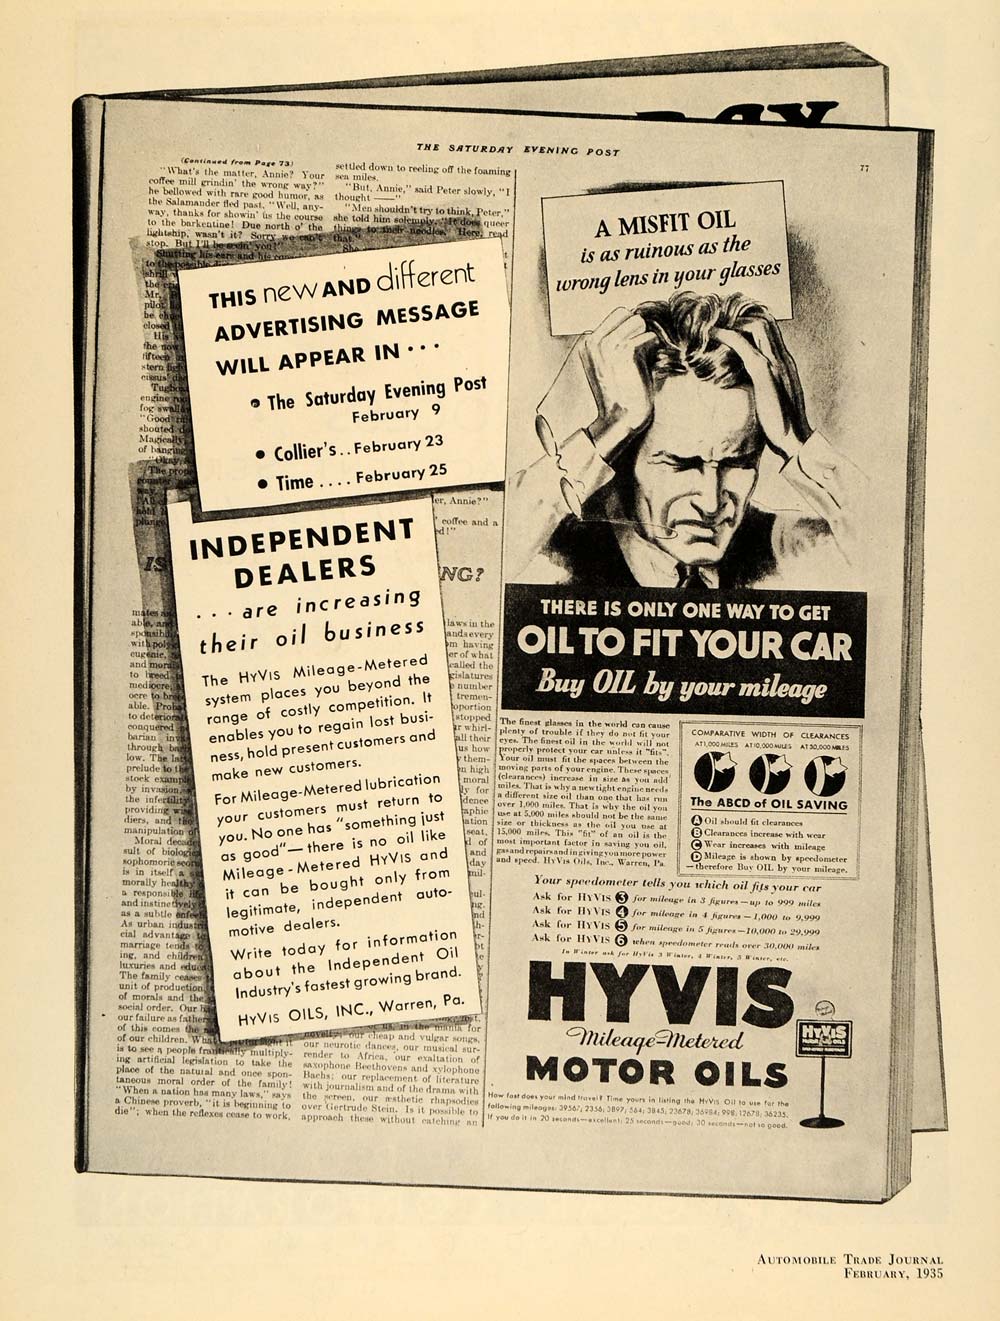 1935 Ad Hyvis Mileage Metered Motor Oils Inc. Warren - ORIGINAL ADVERTISING ATJ1